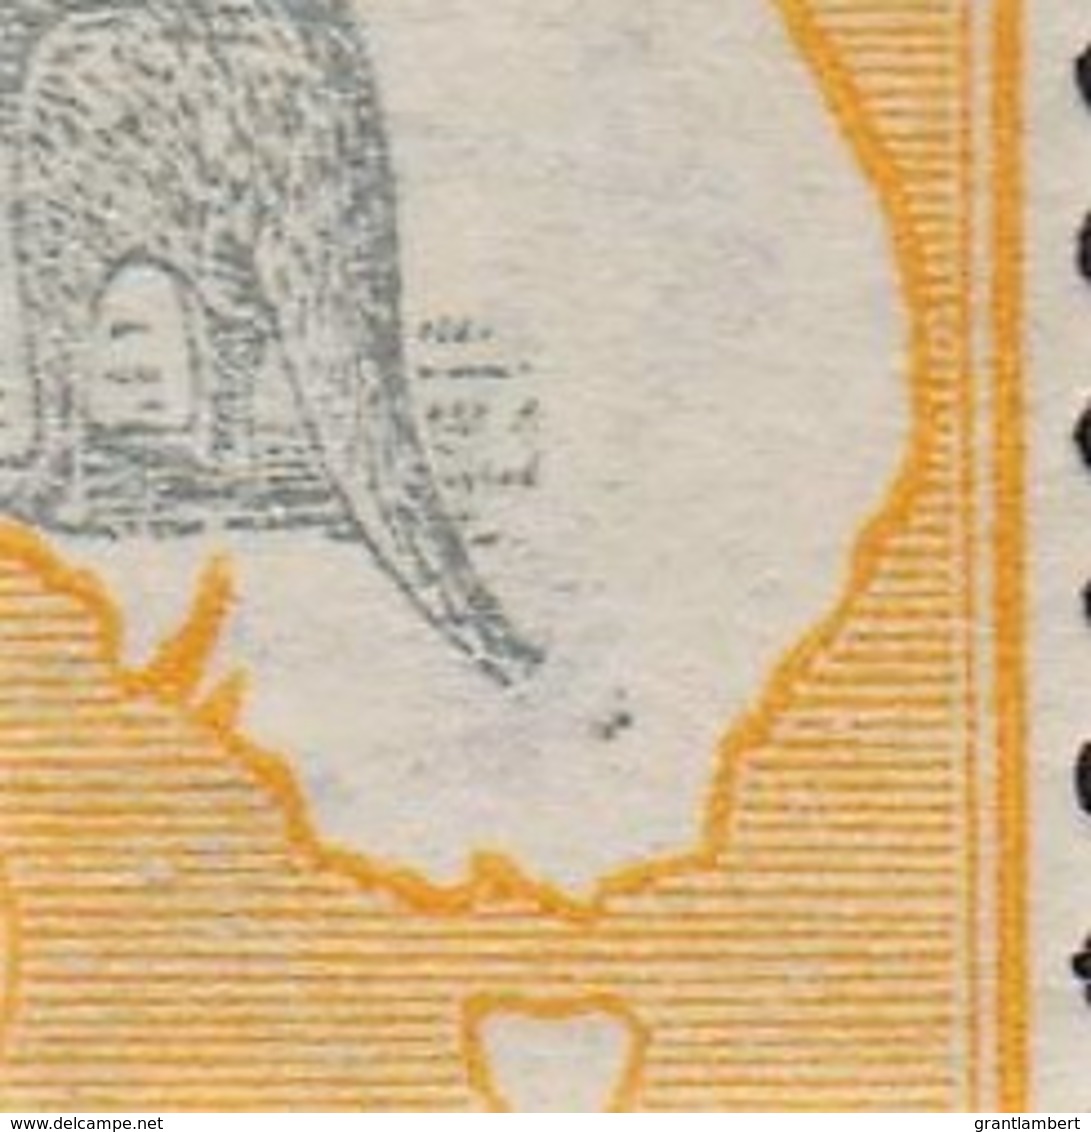 Australia 1913 Kangaroo 5/- Grey & Yellow 1st Wmk MH - Broken Tail Variety - Neufs